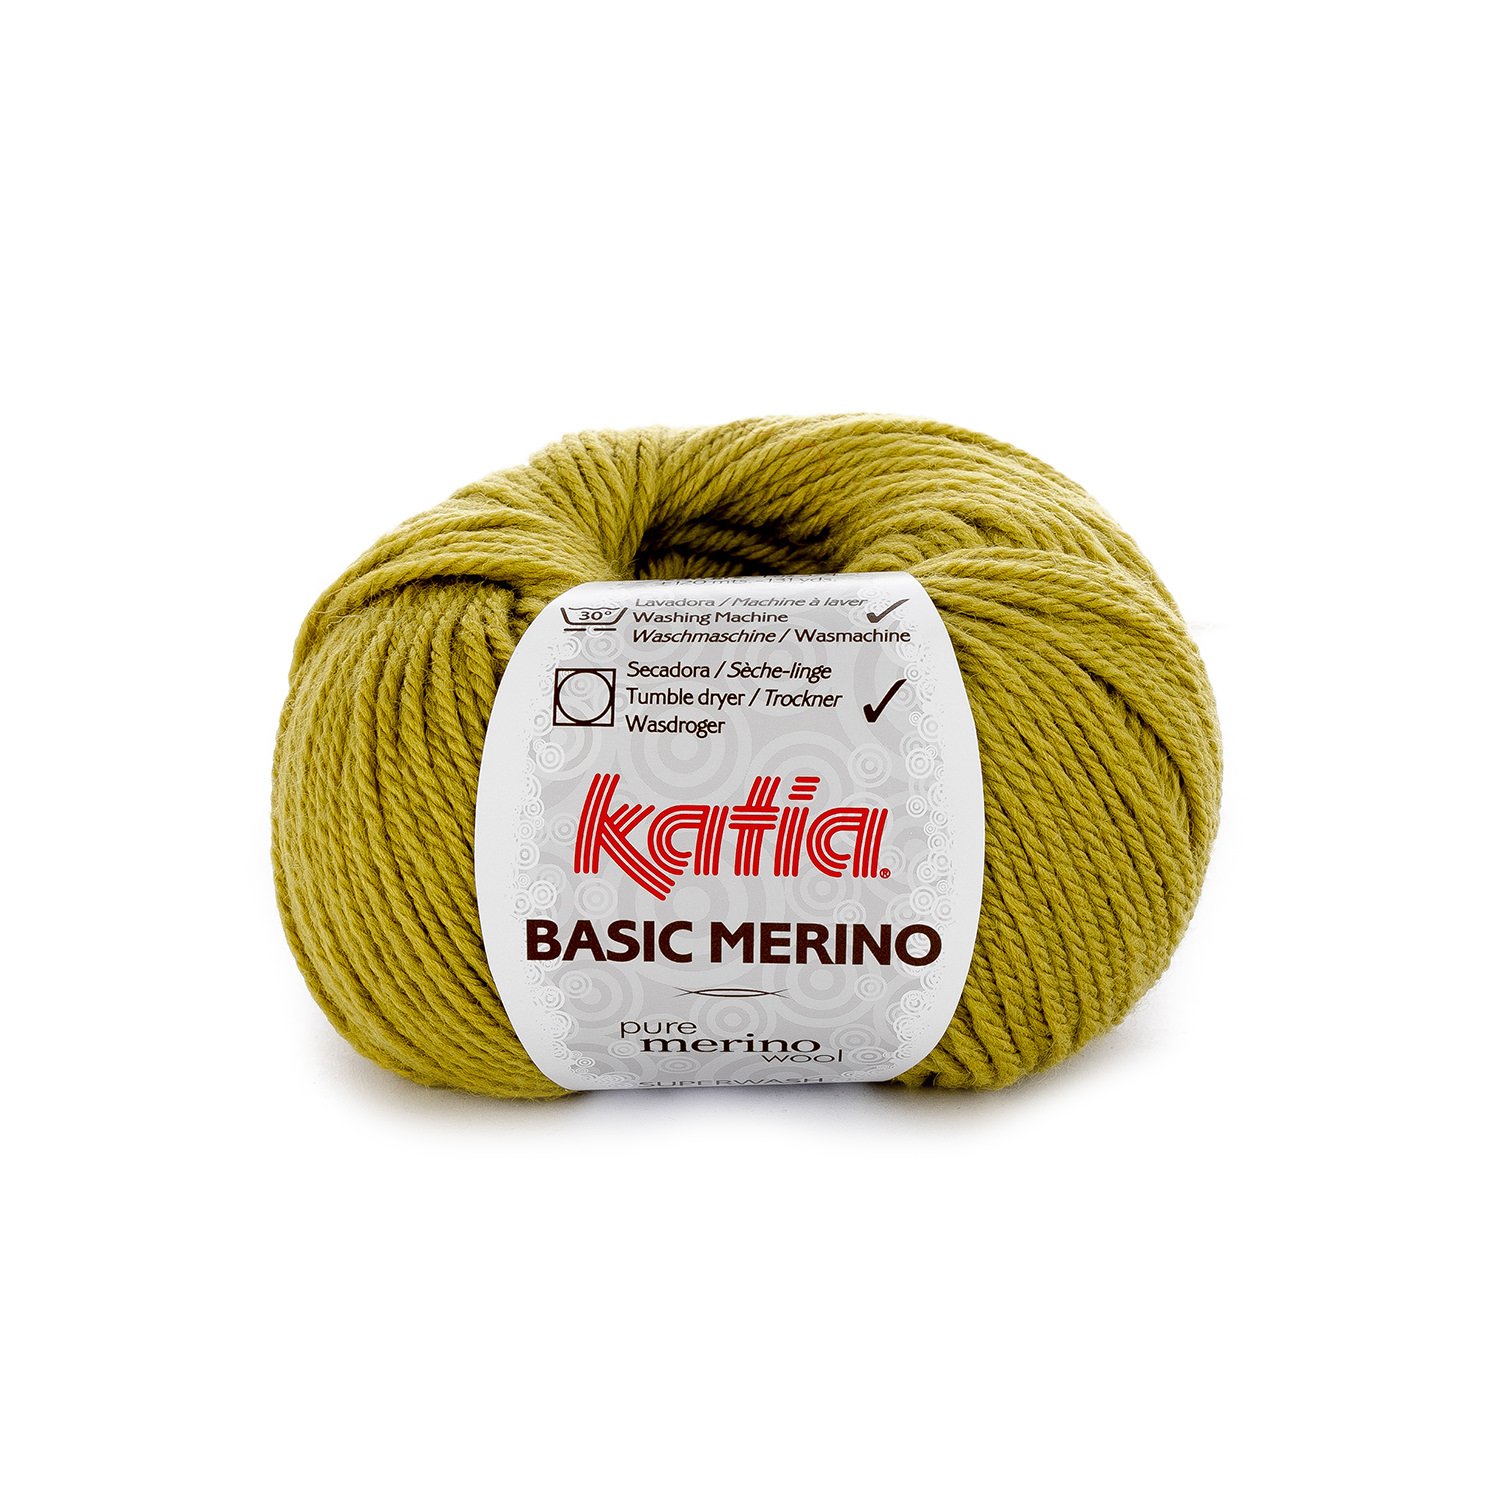 18 laine-fil-basicmerino-tricoter-merino-superwash-acrylique-pistache-automne-hiver-katia-18-fhd